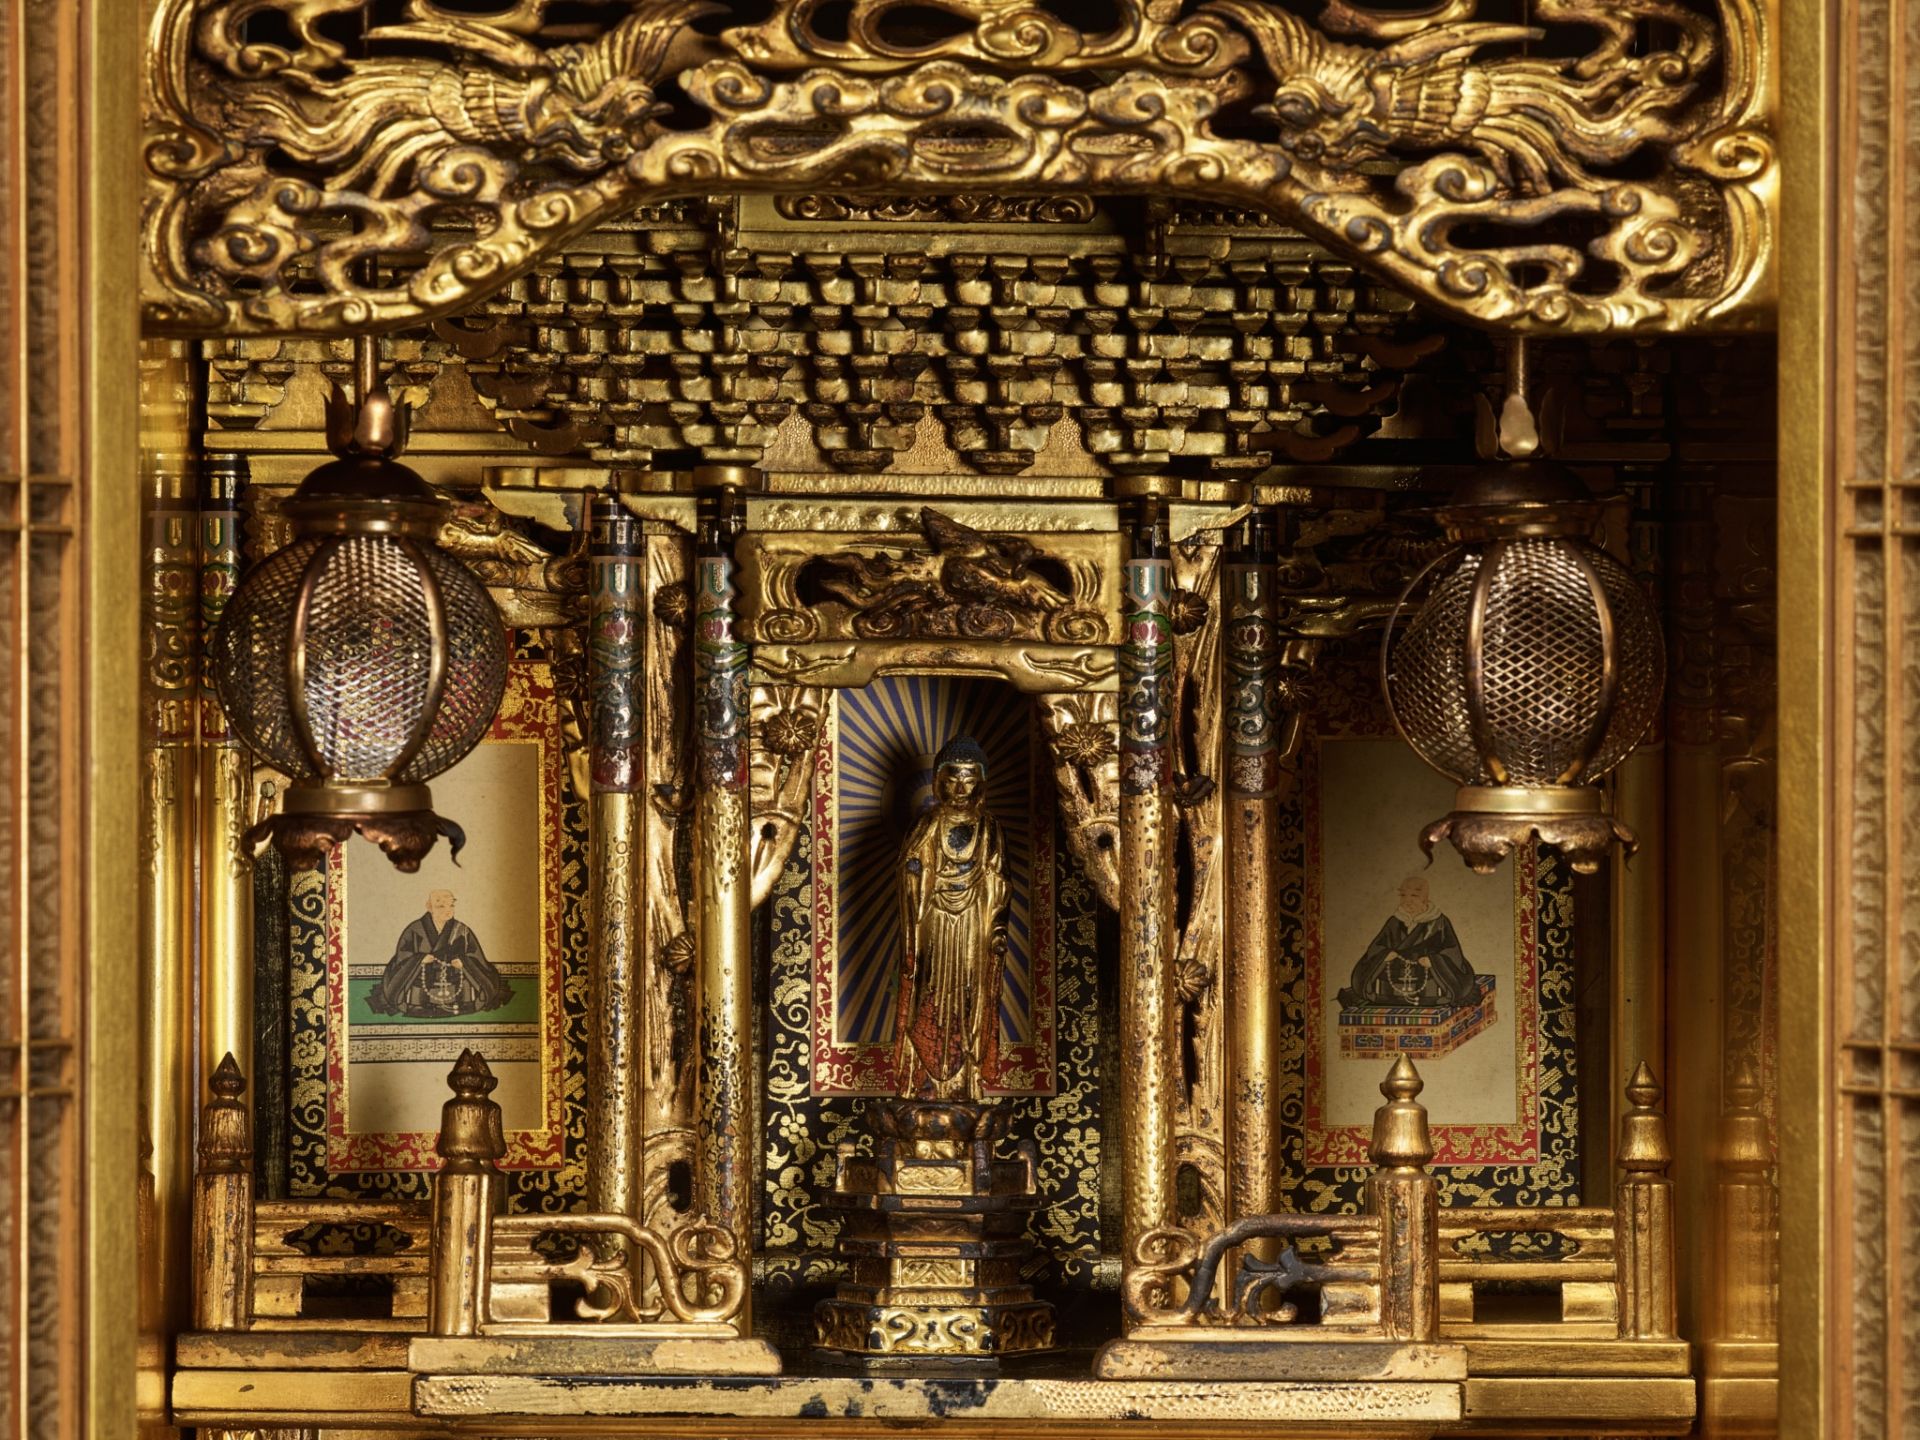 A LARGE BUTSUDAN (BUDDHIST ALTAR) FOR AMIDA